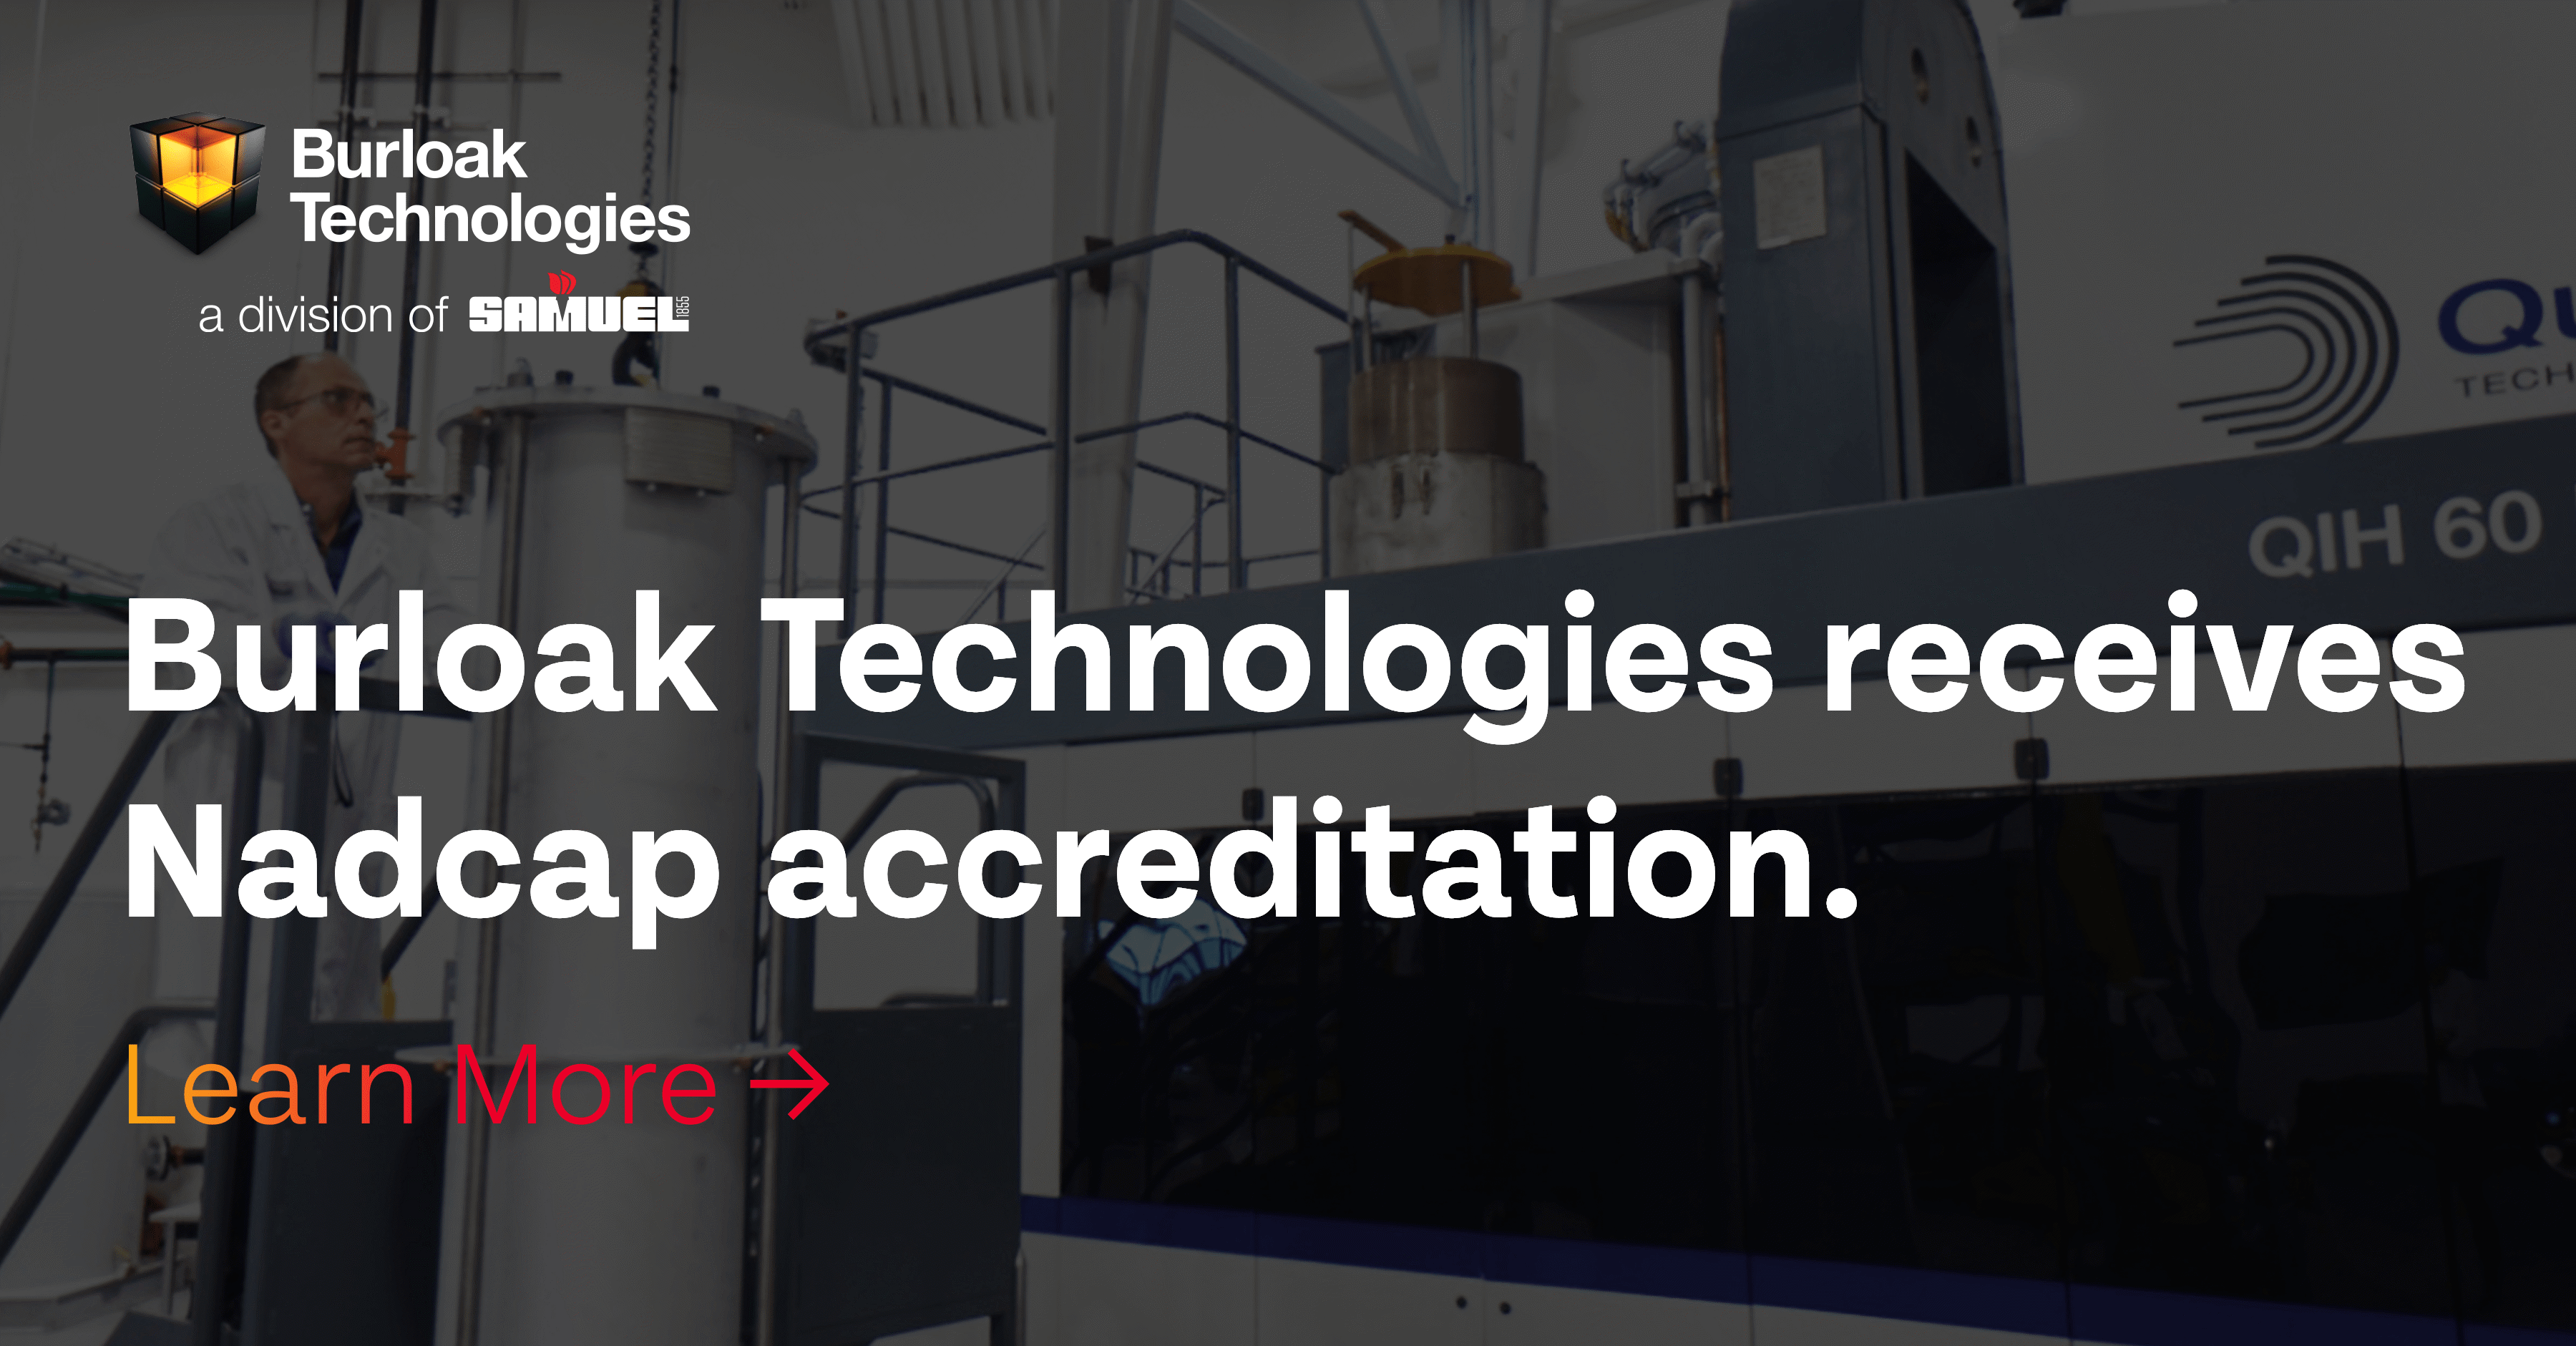 Burloak Technologies Receives Nadcap Certification for Heat Treatment